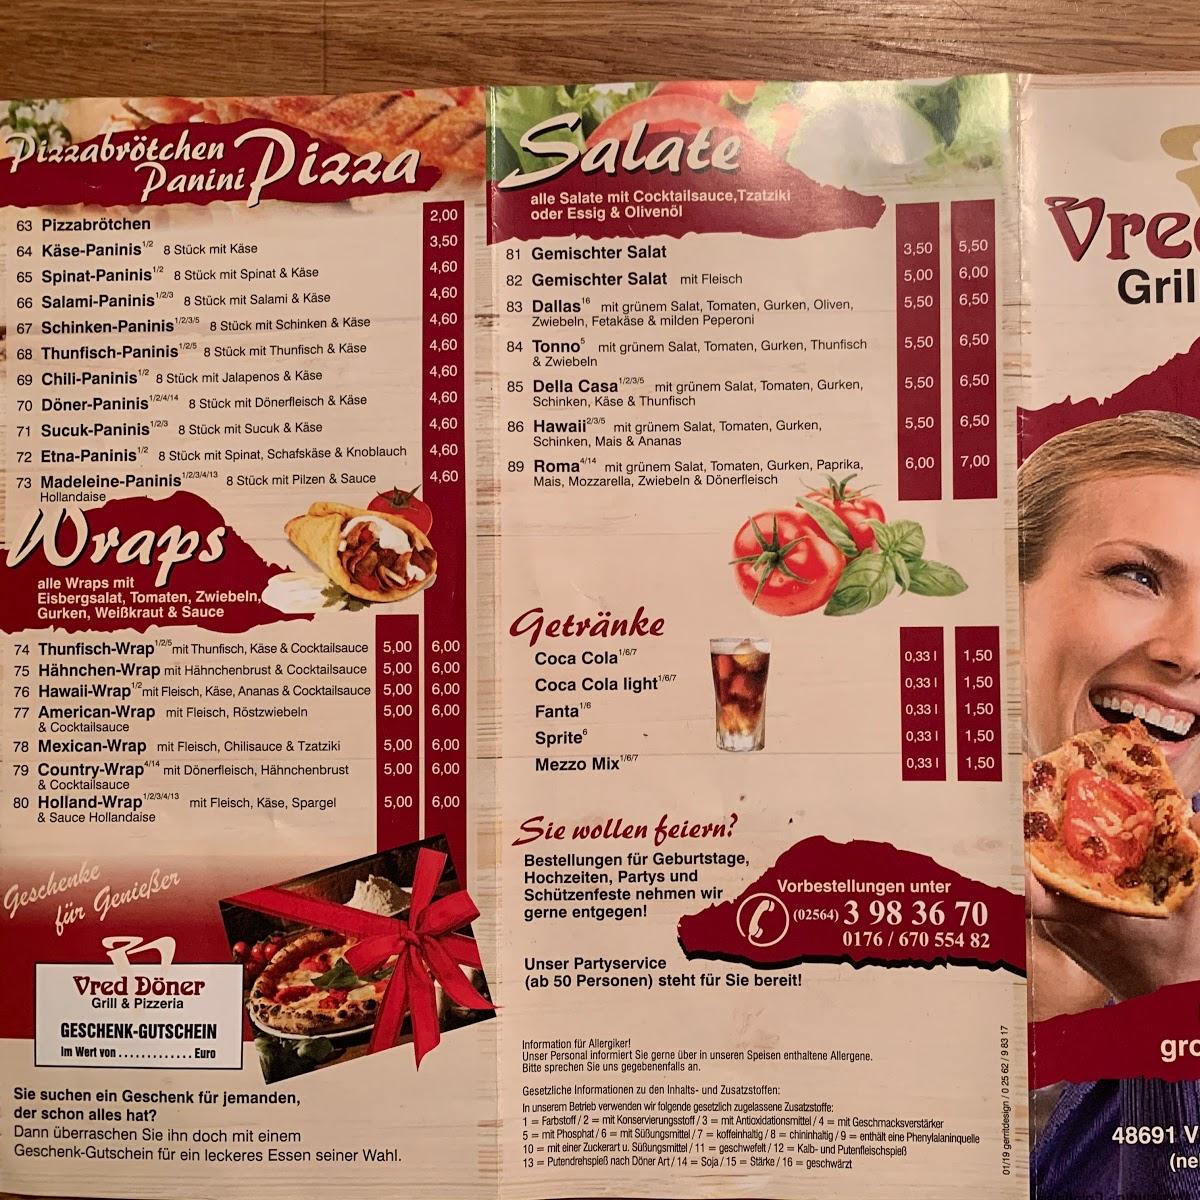 Restaurant "Vred Döner" in Vreden